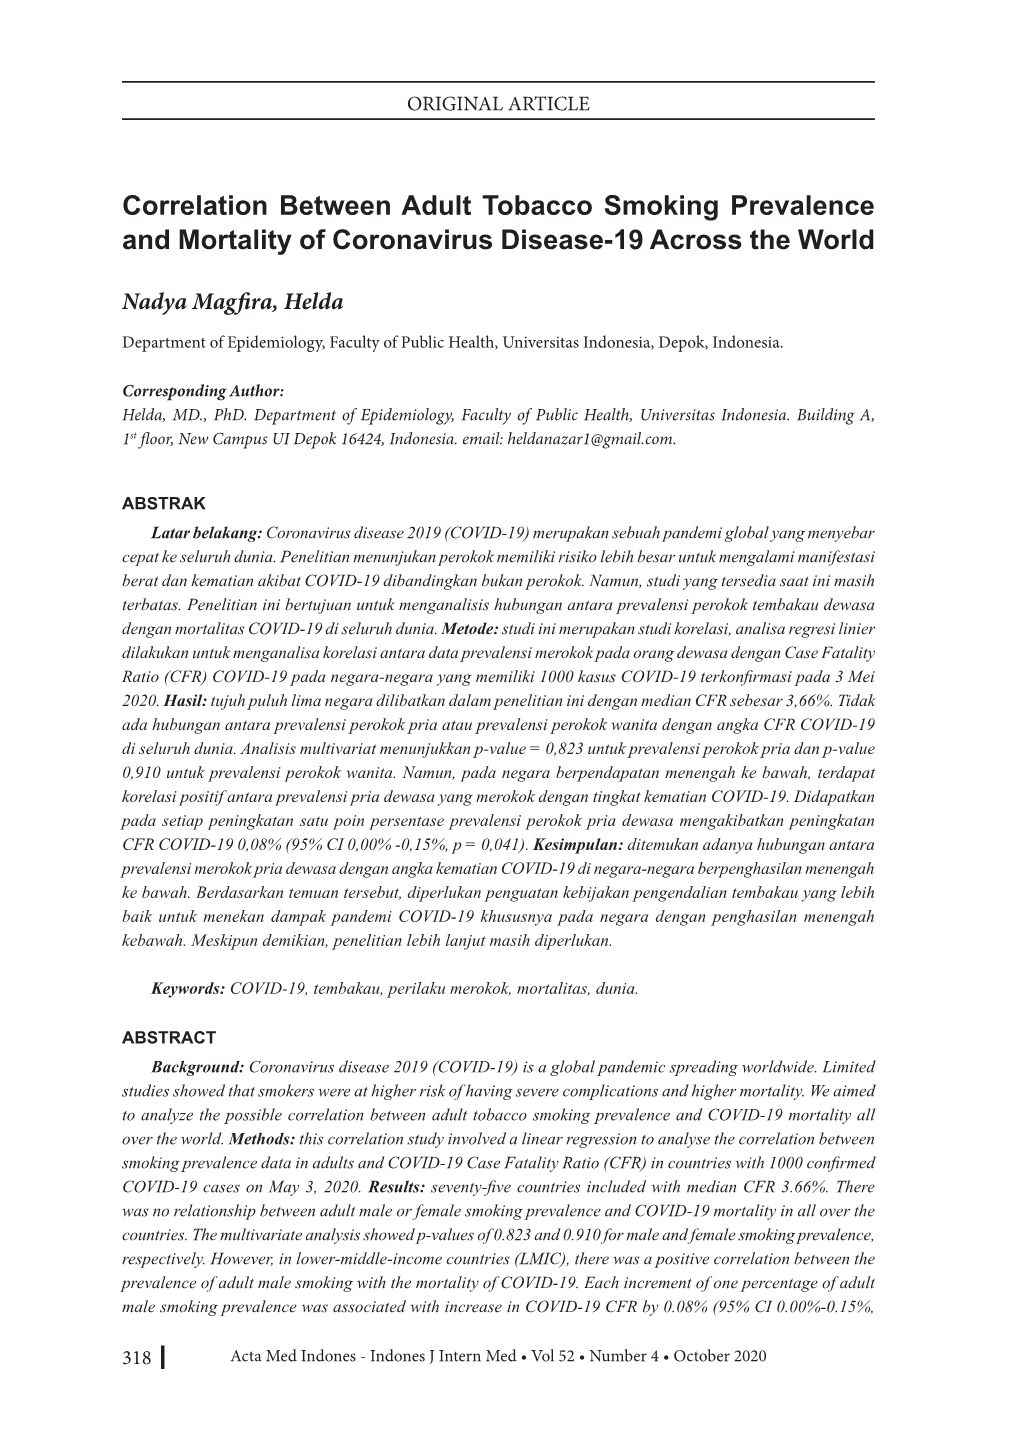 Correlation Between Adult Tobacco Smoking Prevalence and Mortality of Coronavirus Disease-19 Across the World